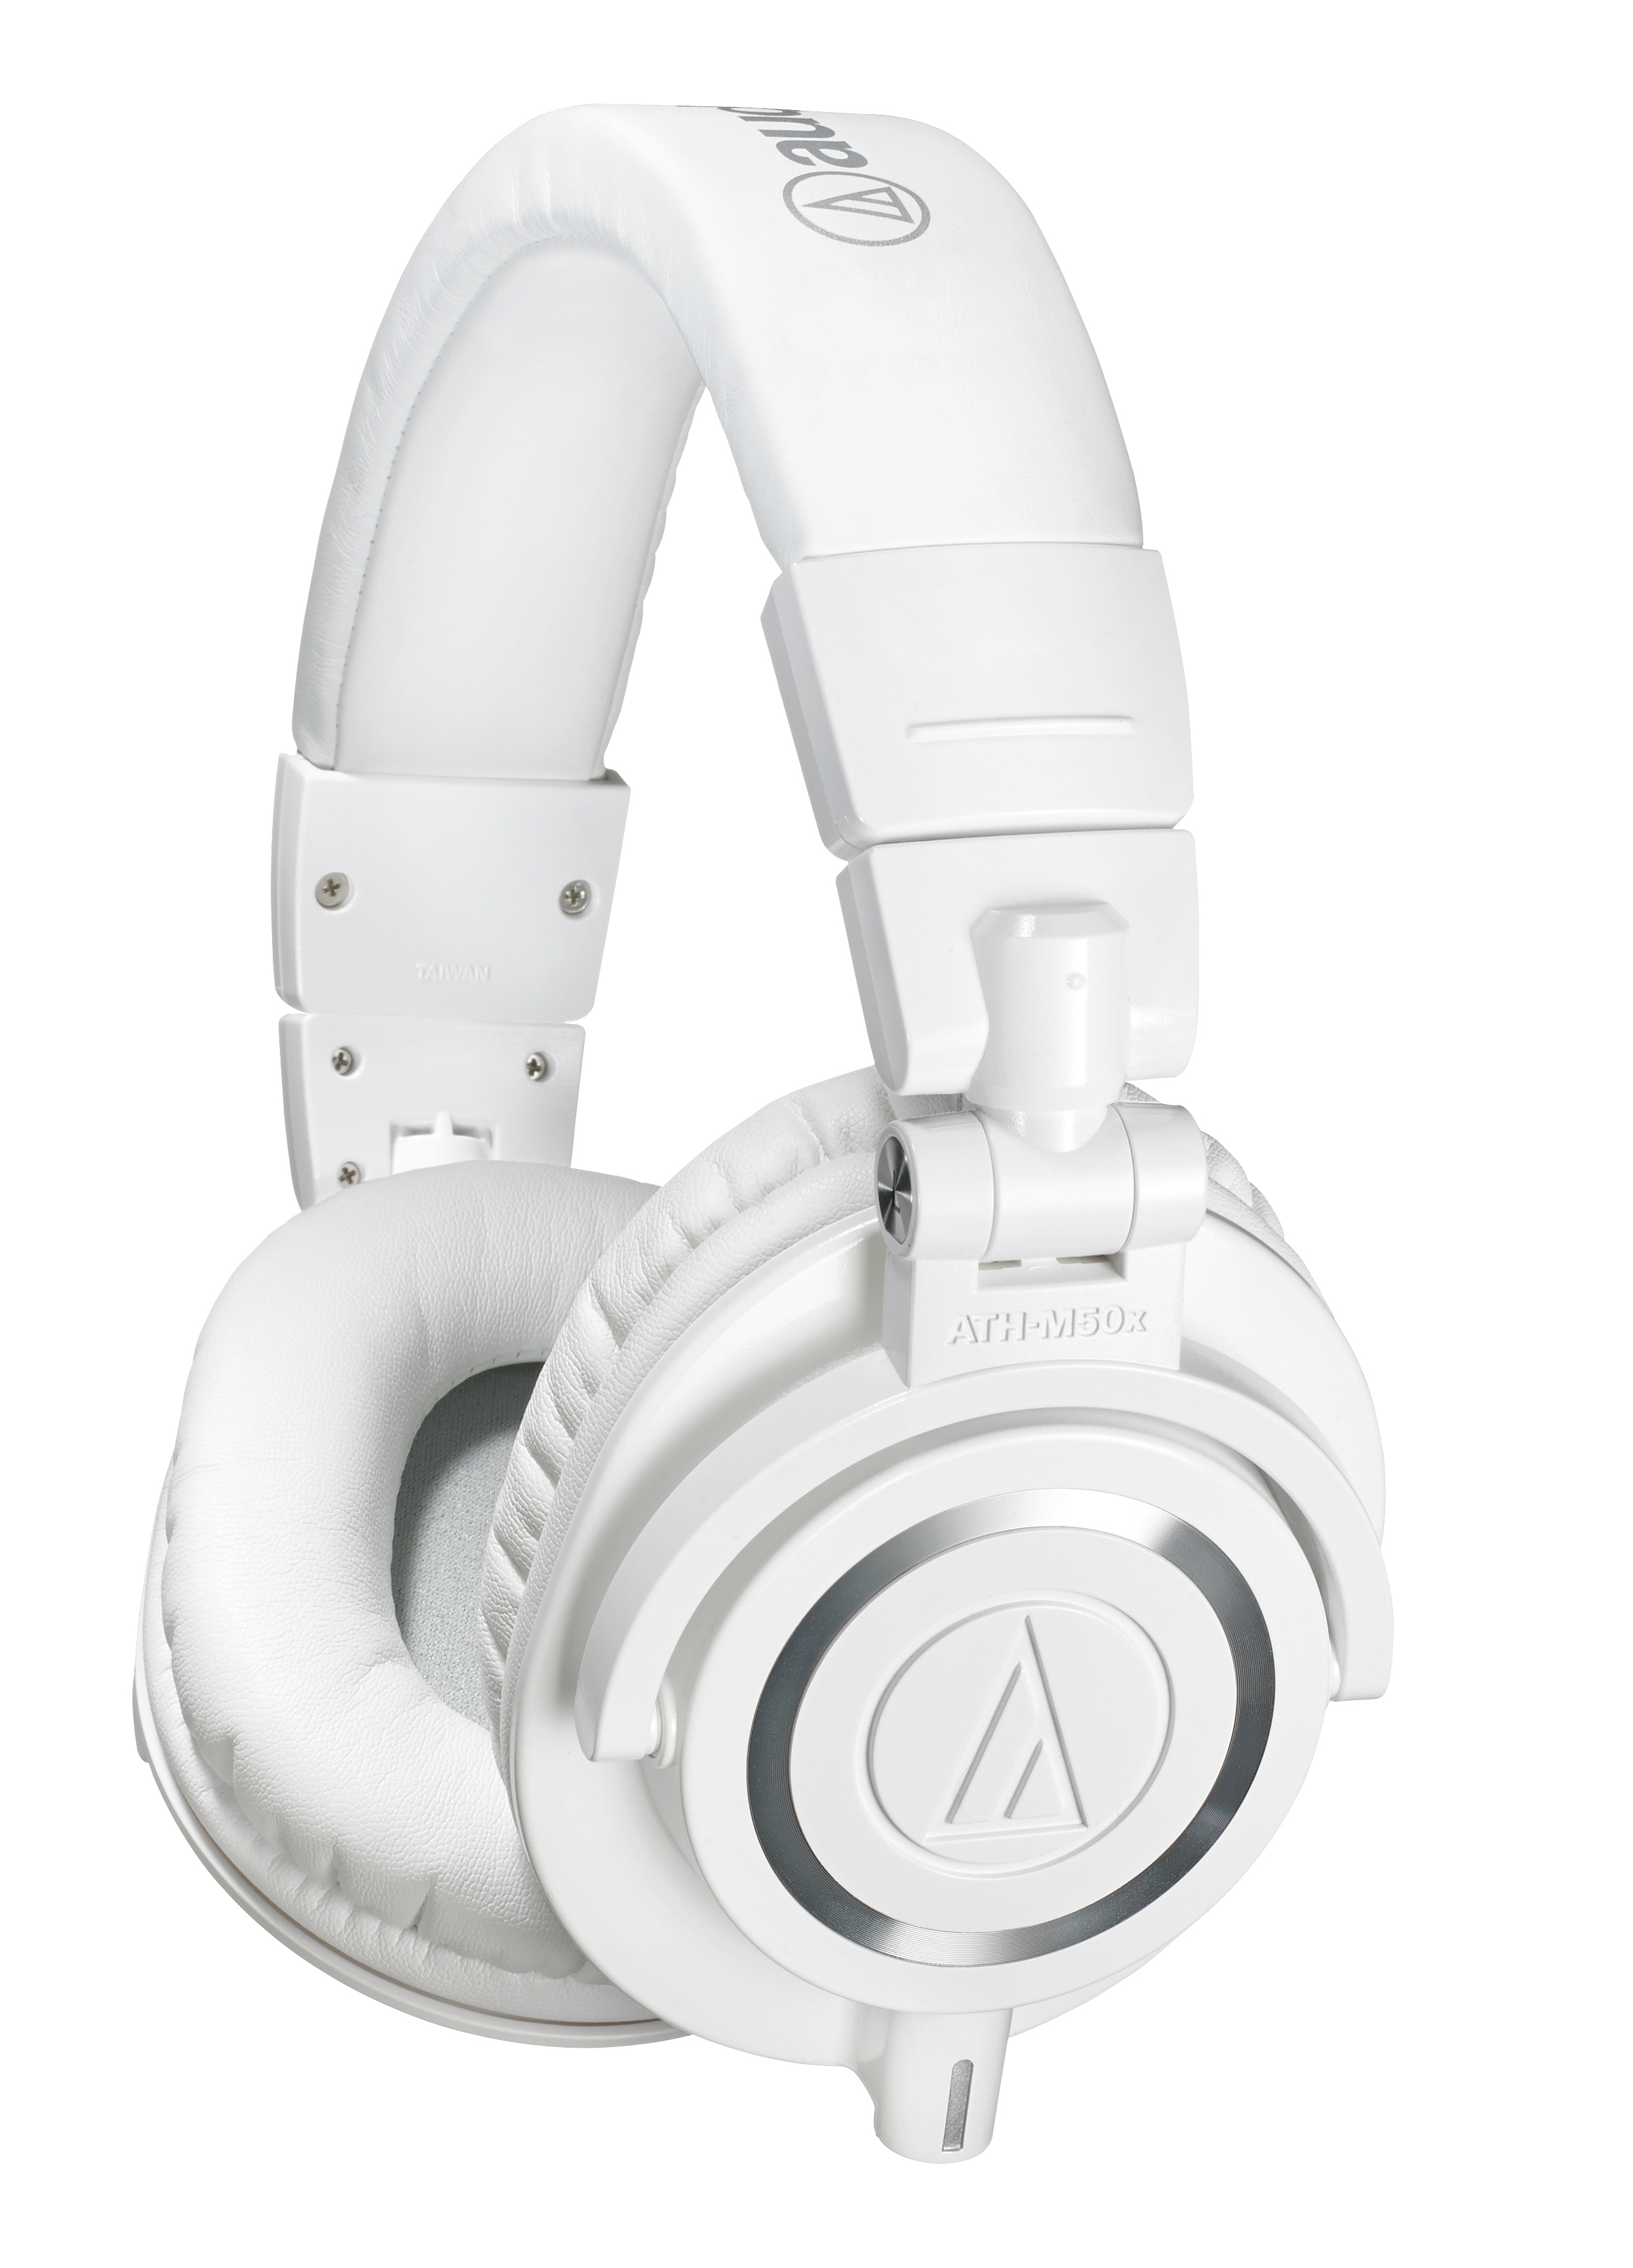 Audio Technica ATH-M50X Over Ear Professional Studio Monitor Headphones W/ Case | eBay